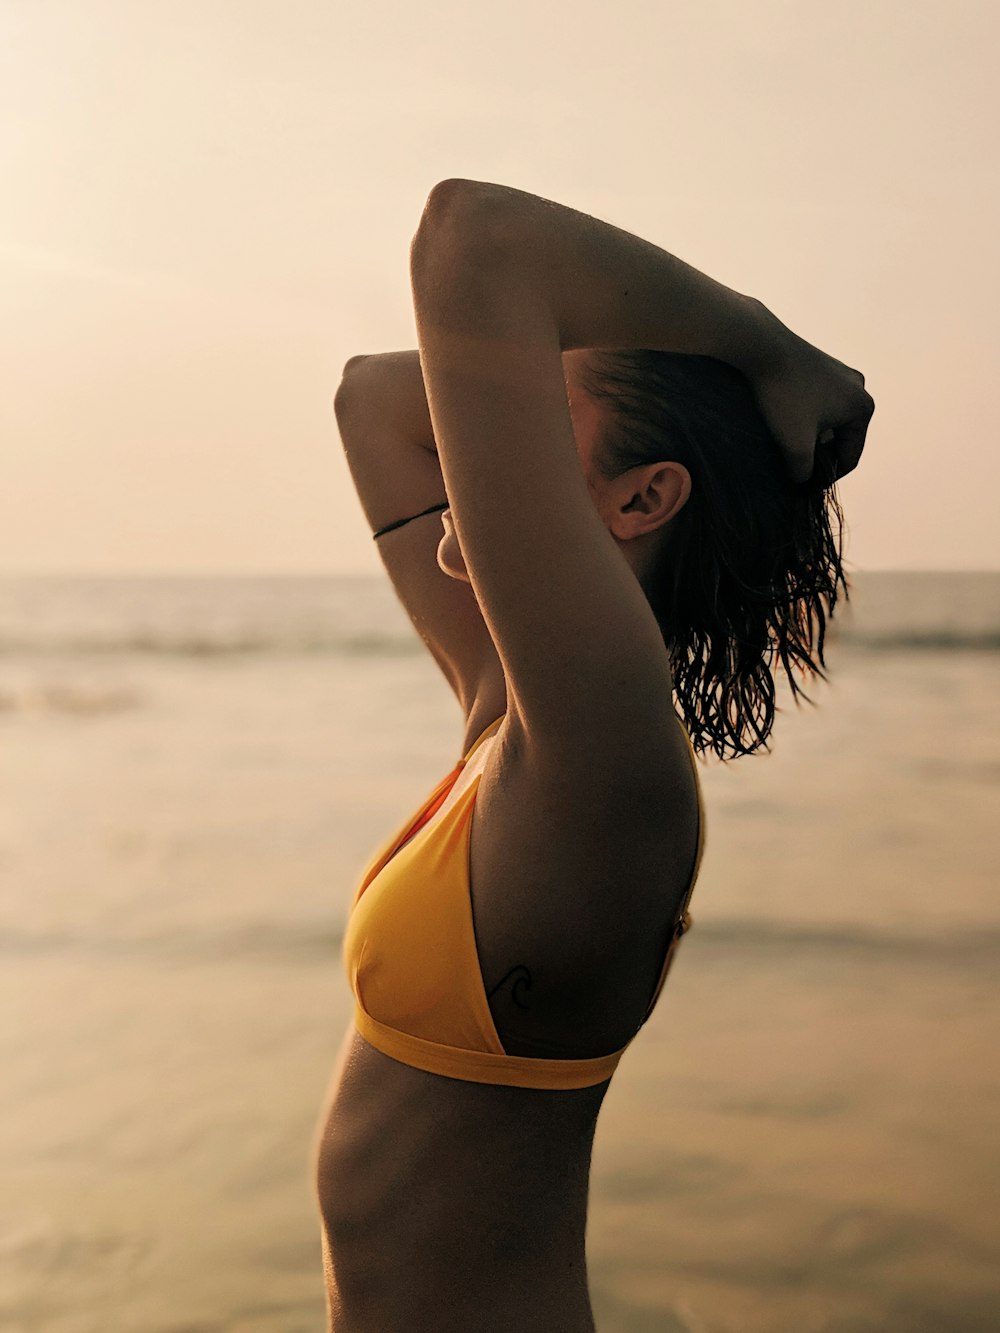 woman in yellow bikini kneeling on beach shore during daytime